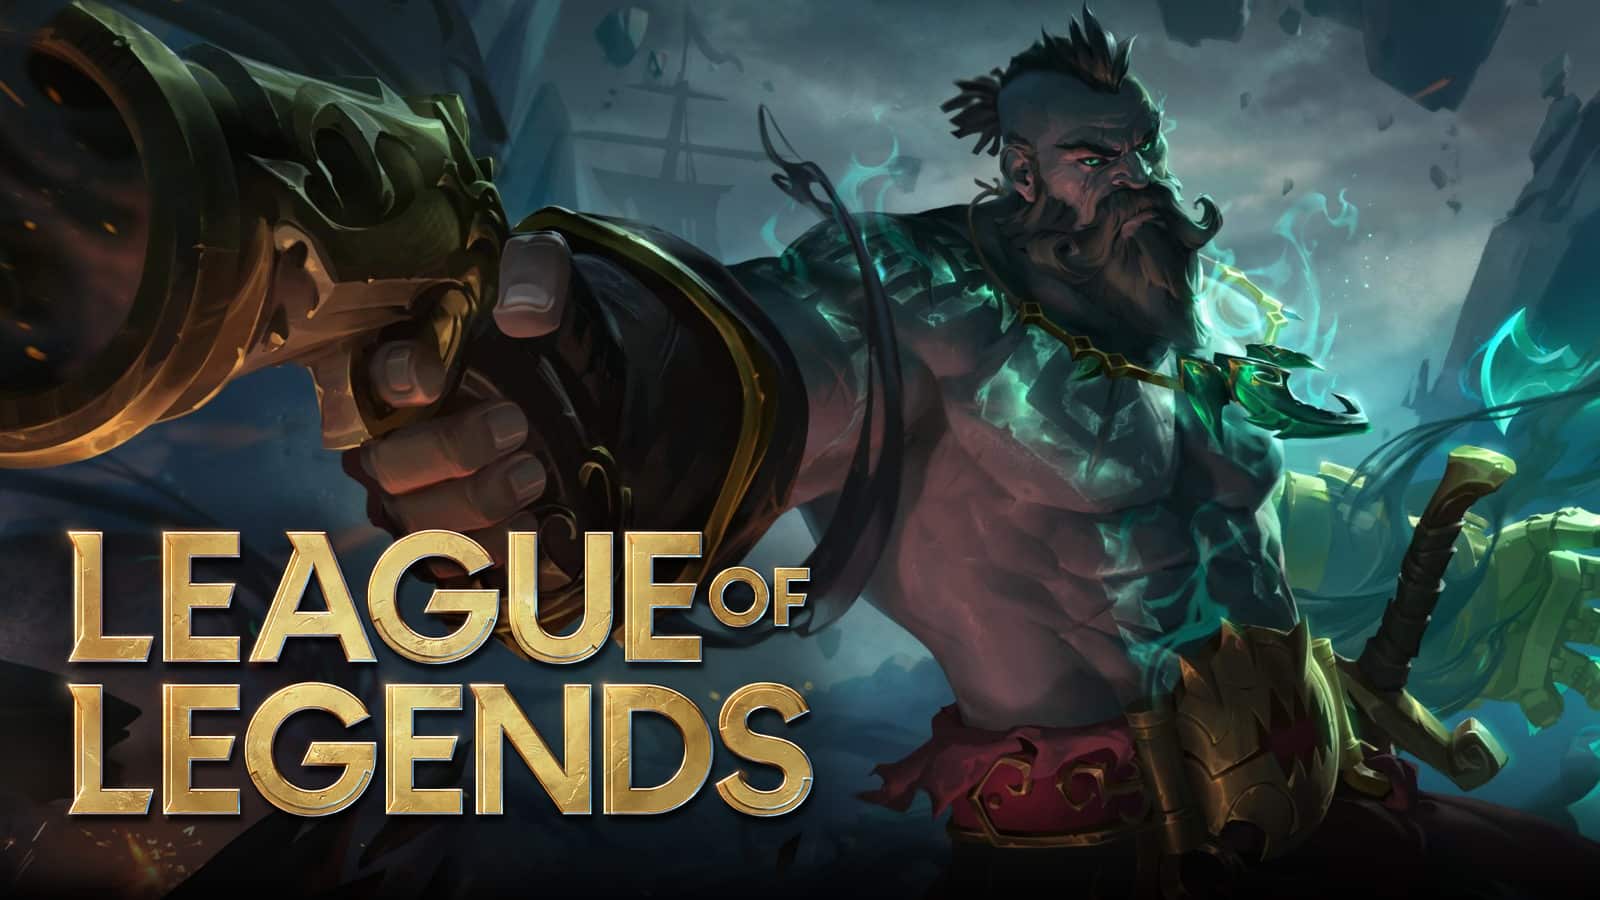 Gangplank the betrayer in league of legends